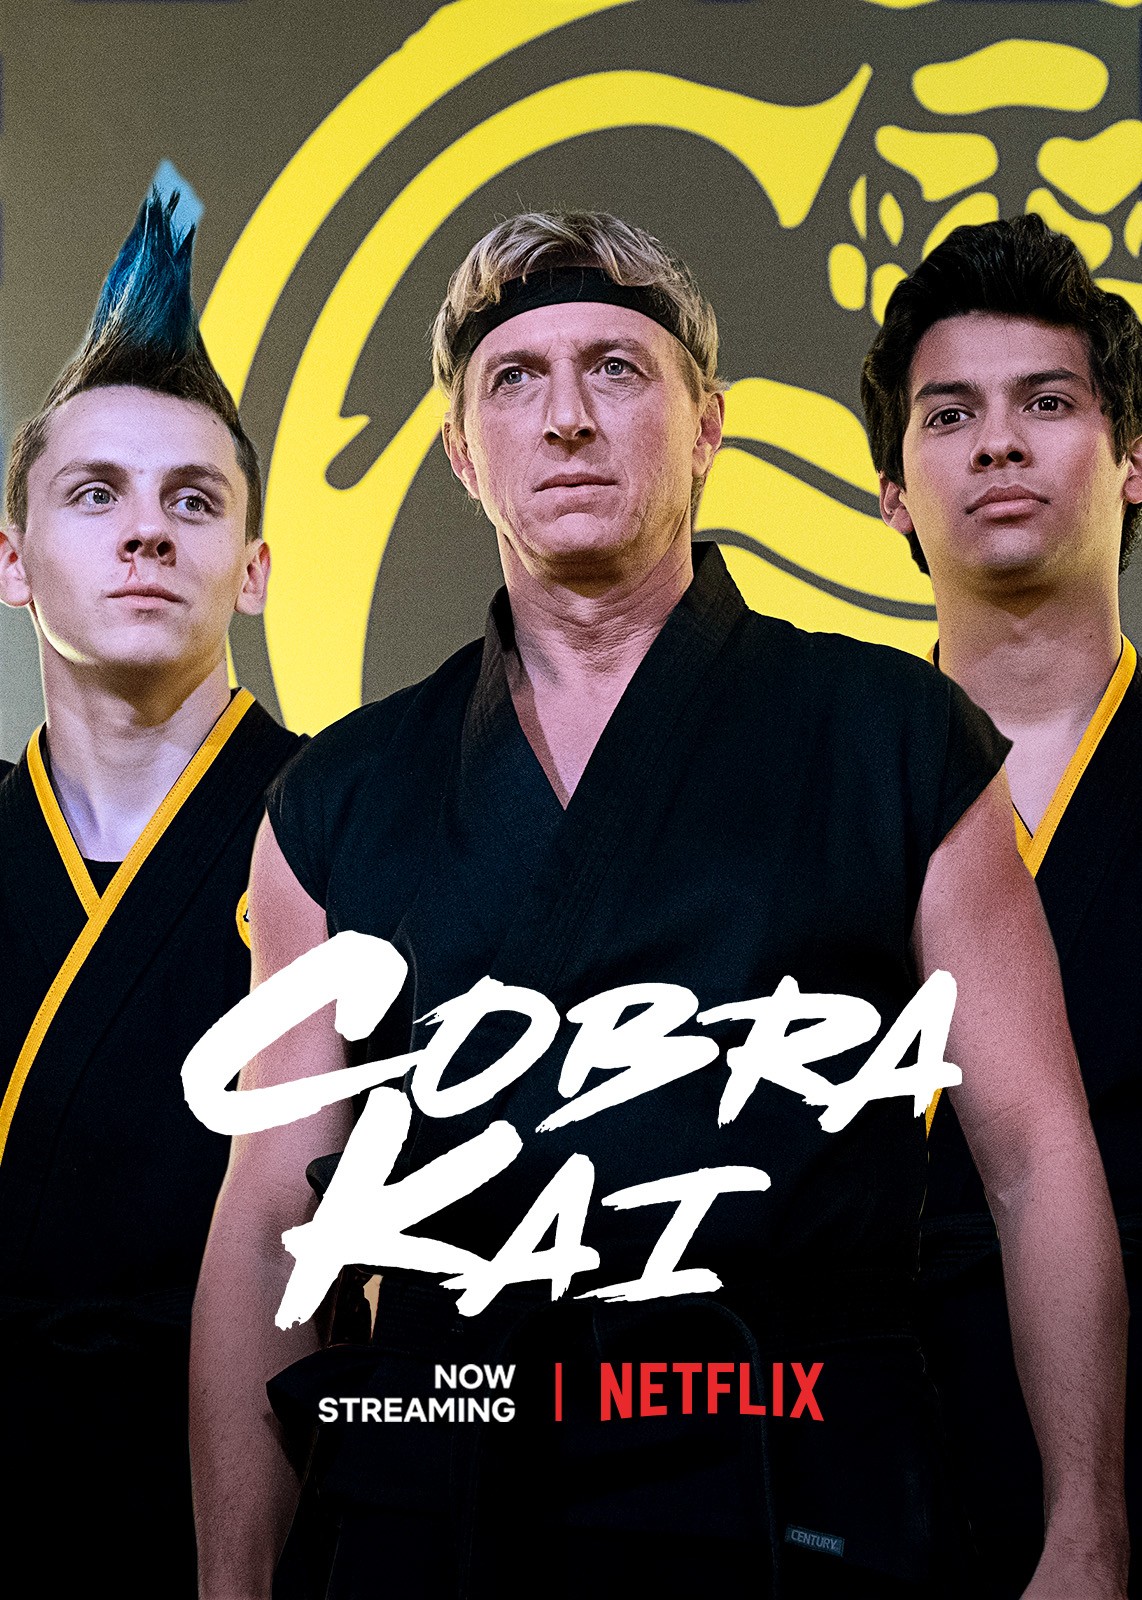  Cobra Kai - Season 05 (2 Disc) - DVD : Ralph Macchio, William  Zabka, Courtney Henggeler, Xolo Maridueña, Tanner Buchanan: Movies & TV